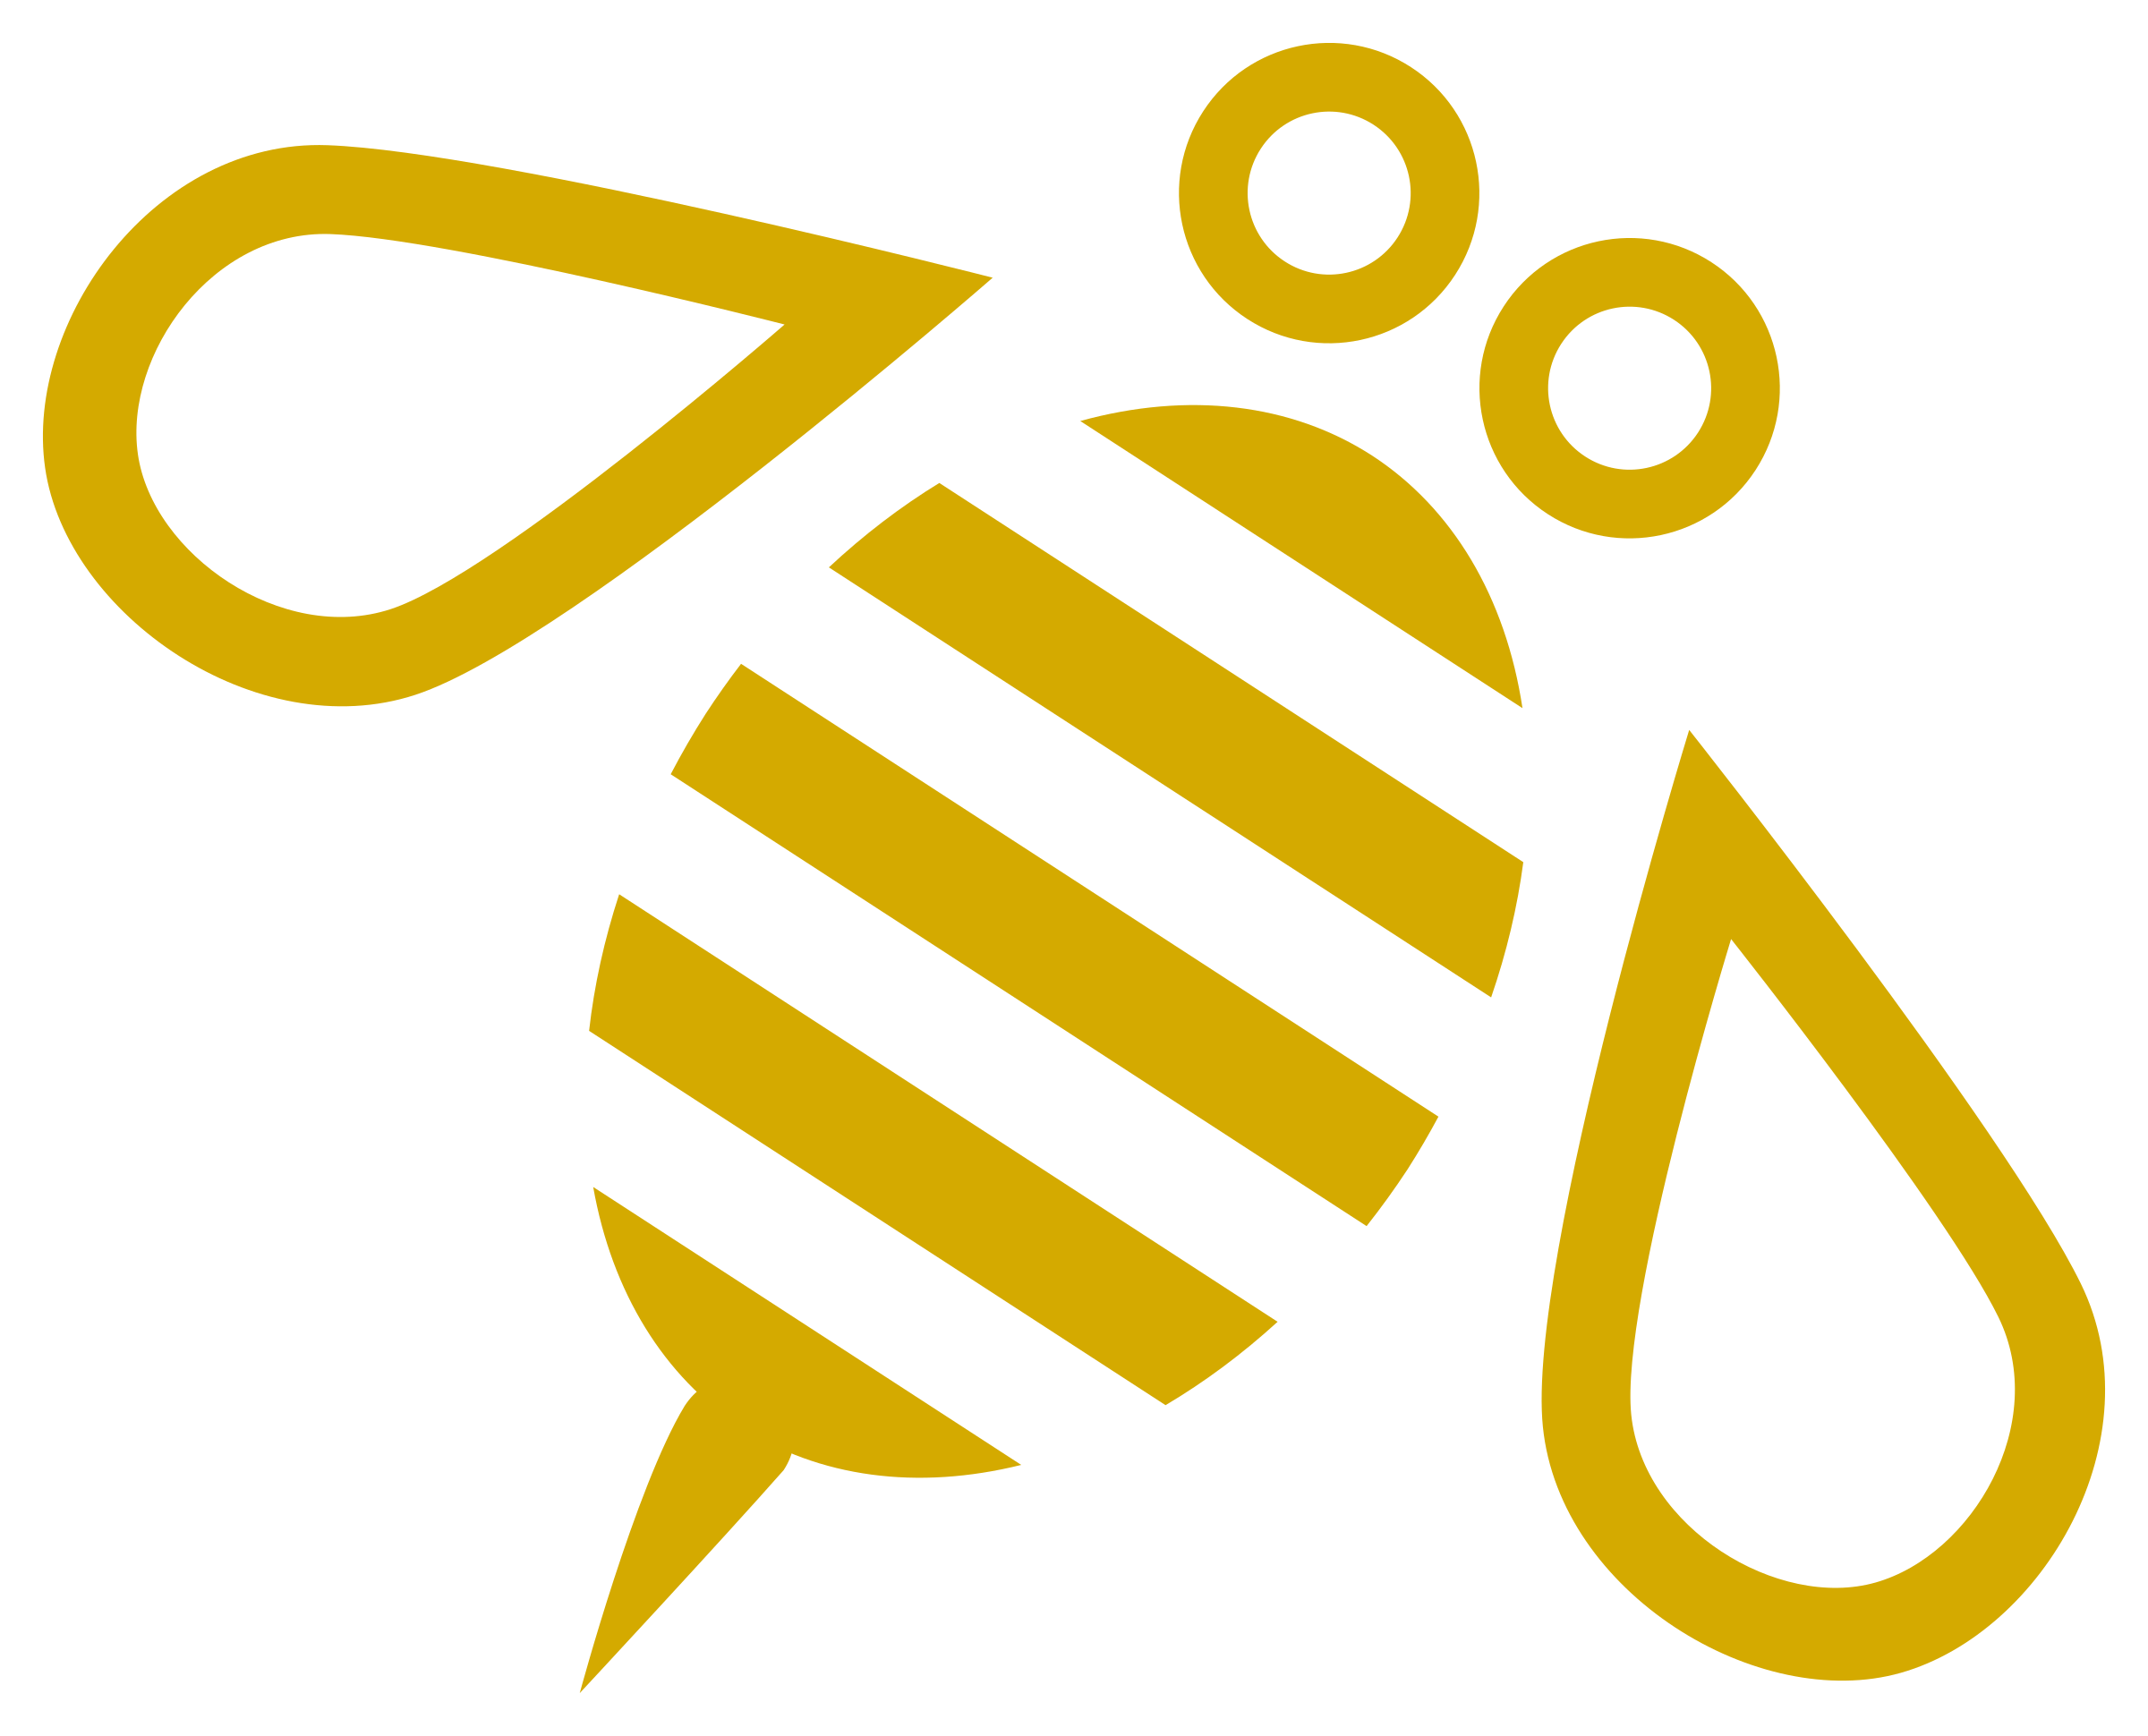 Bumblebee PNG Trasparente VETTORE APE MIELE